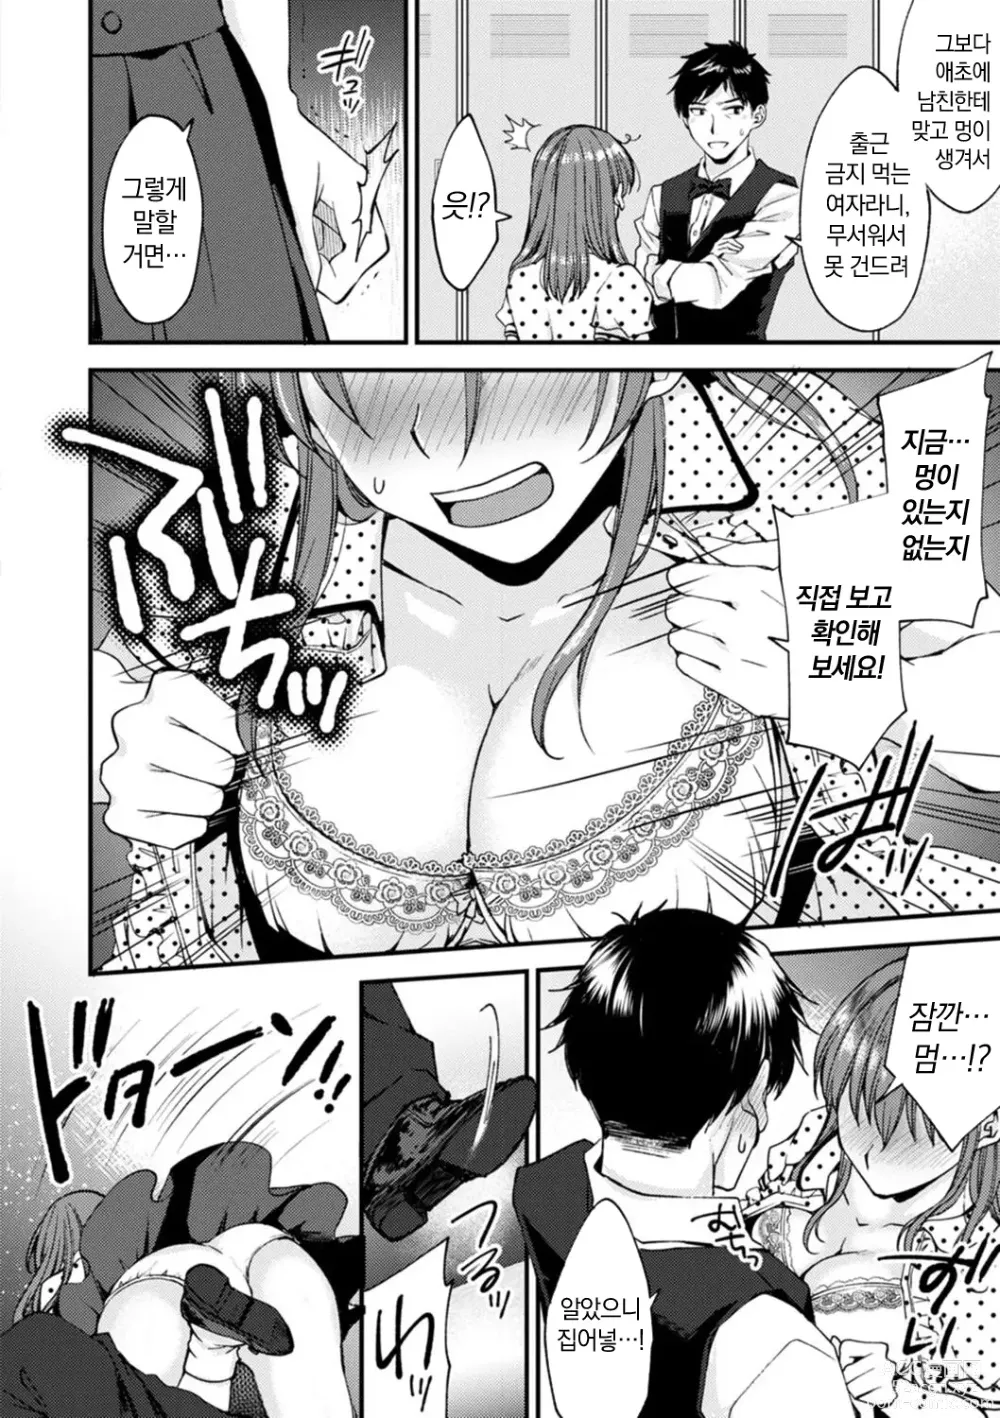 Page 26 of manga 취미가 바니걸이라니 정말이에요?